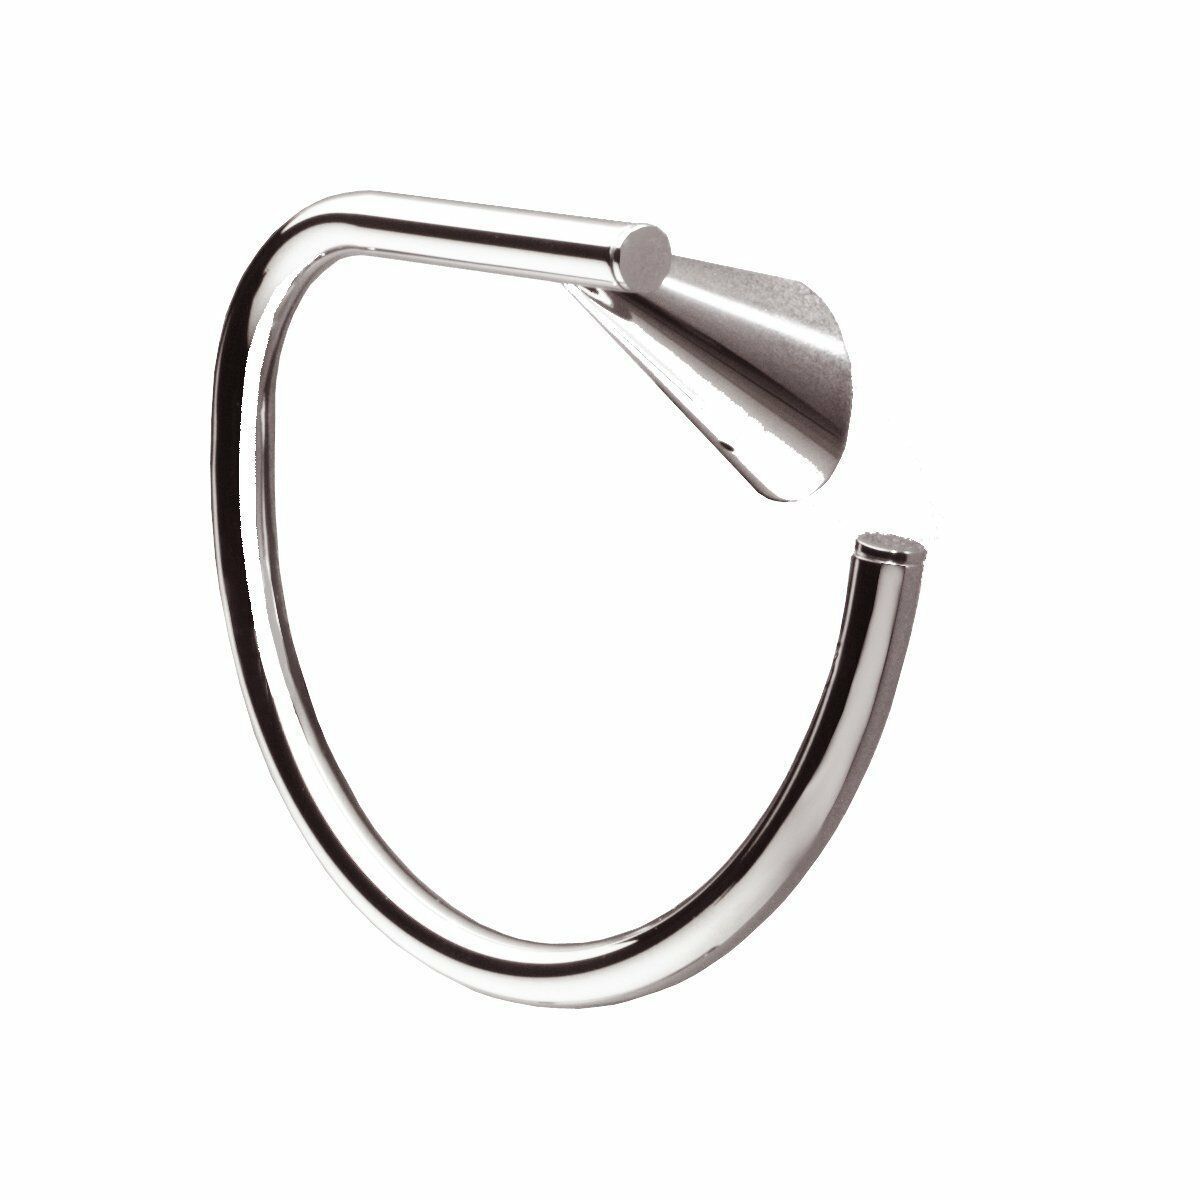 Primary image for Nova Polished chrome small towel ring. Nova collection